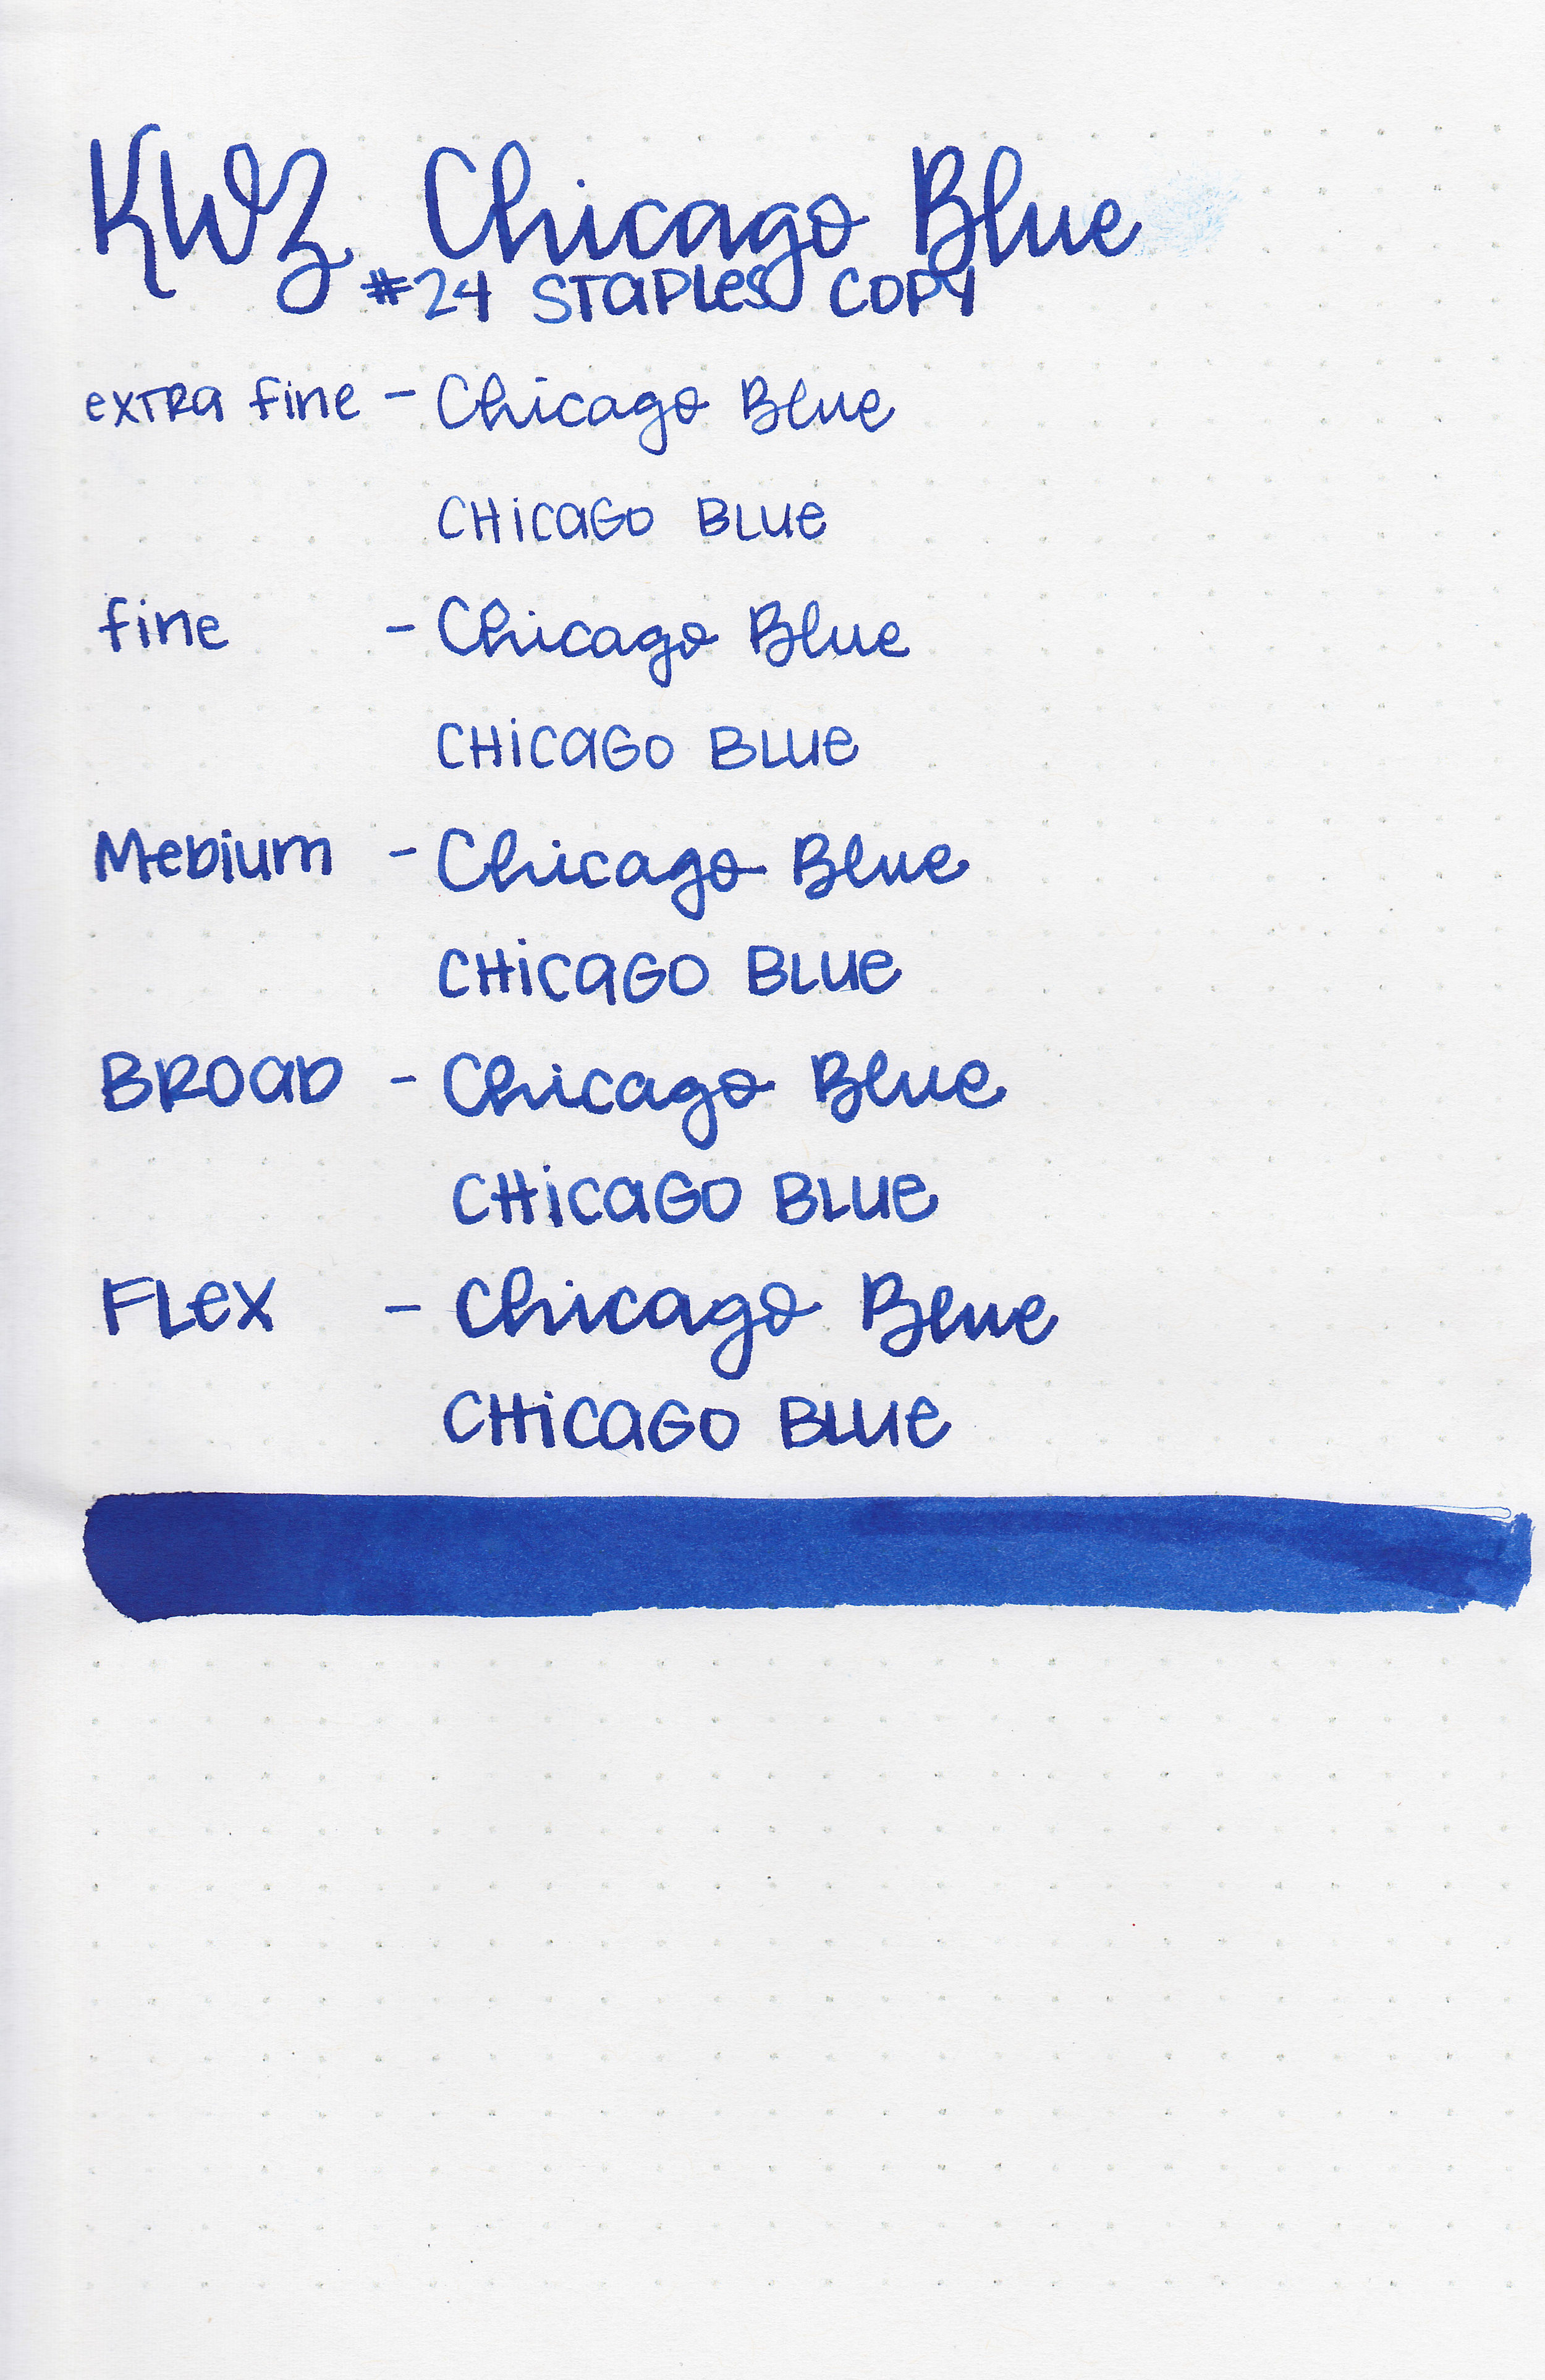 kwz-chicago-blue-11.jpg